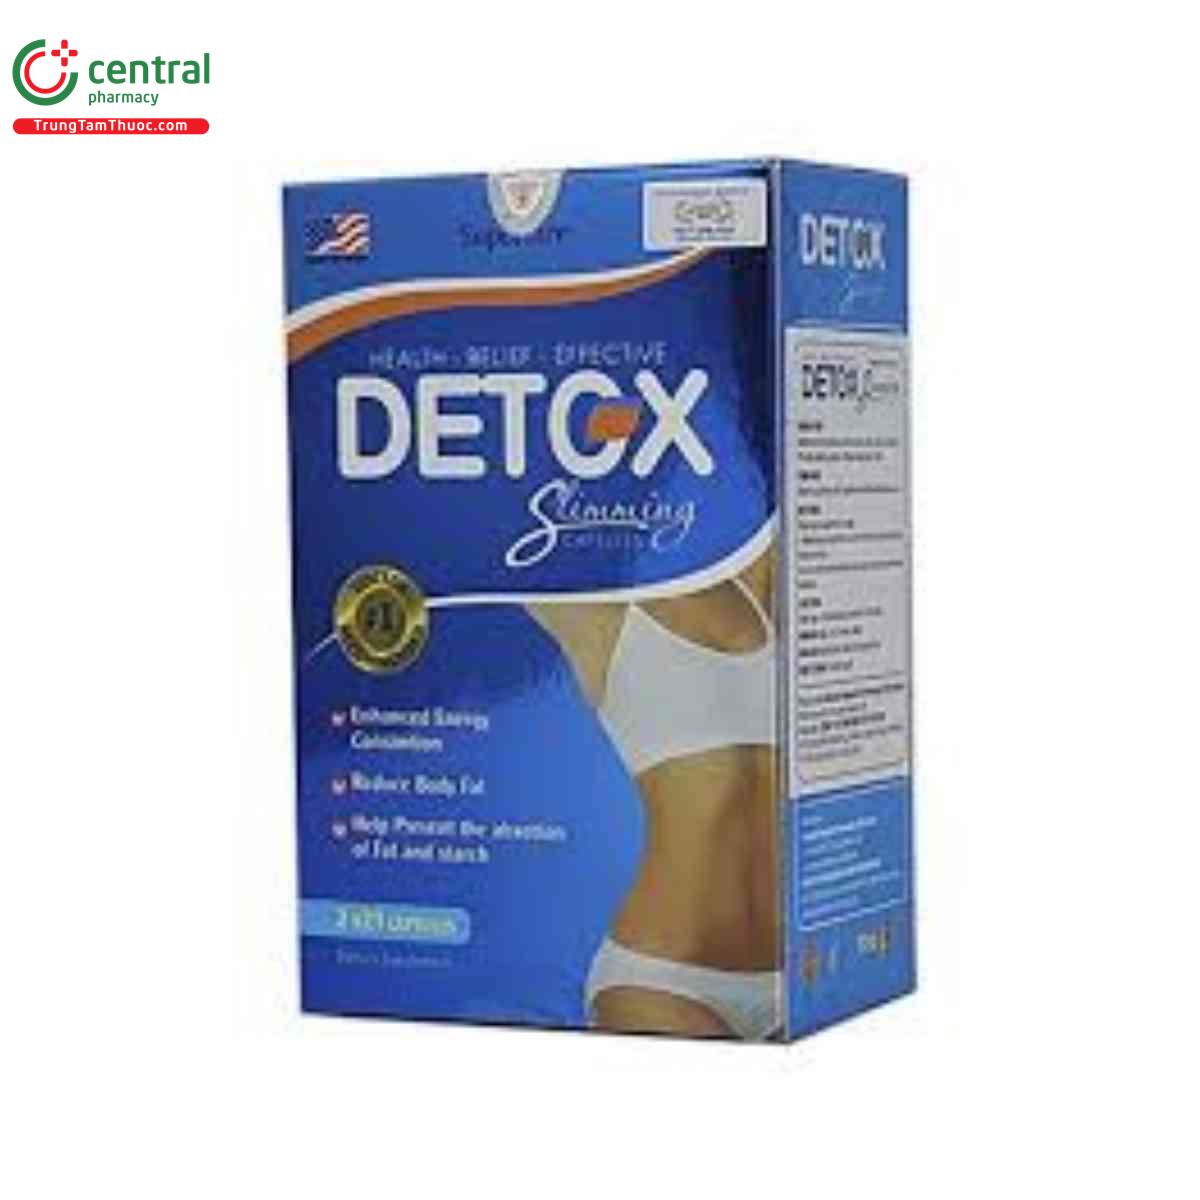 detox slimming capsules 5 M5000